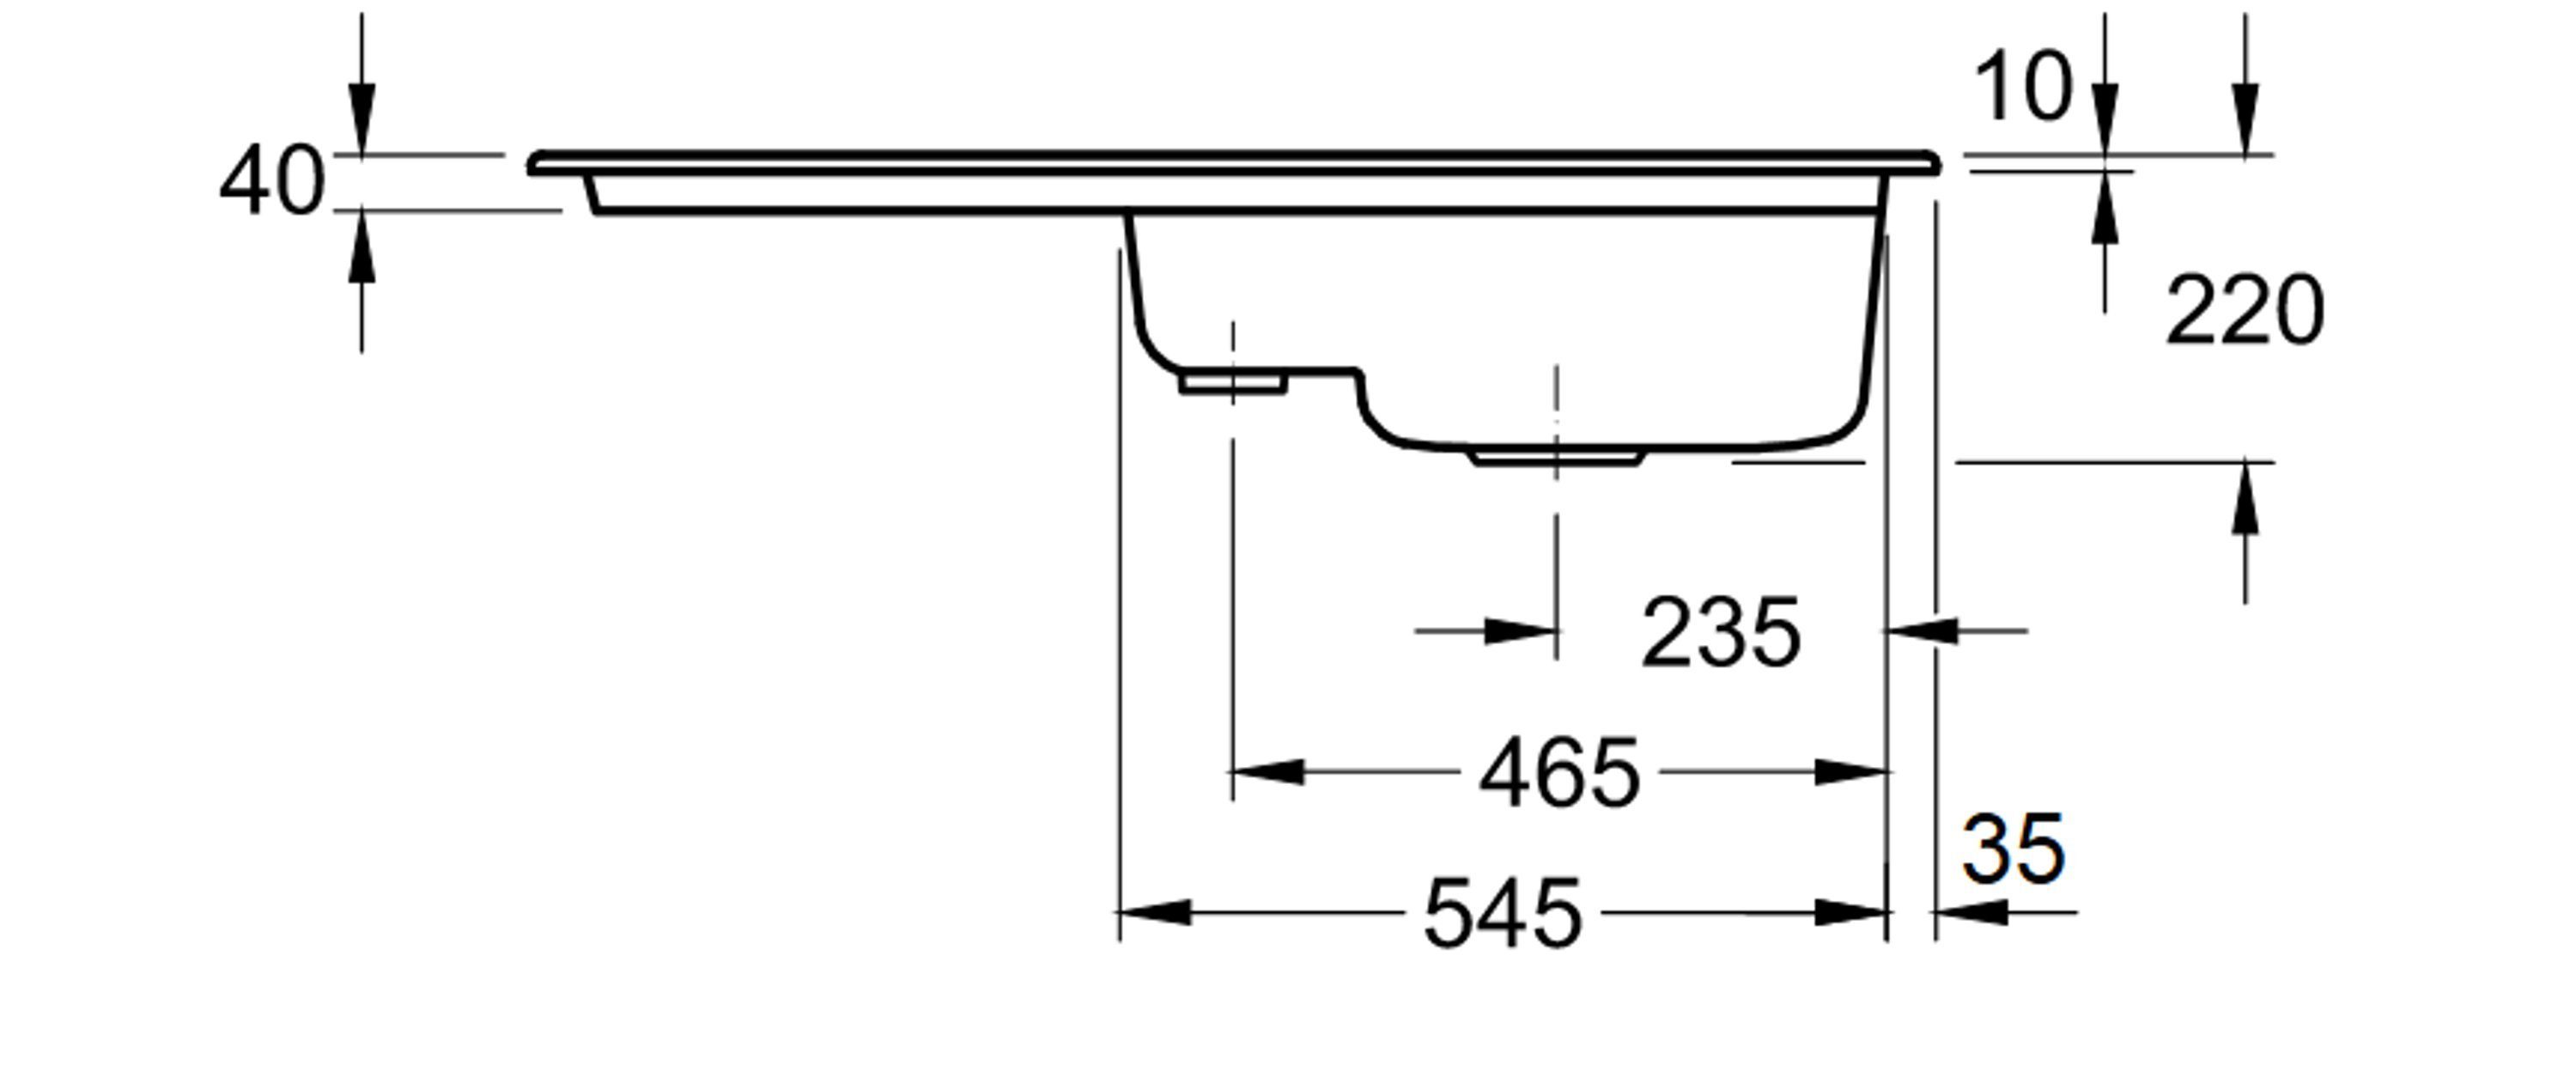 Becken Rechteckig, Boch 100/22 links cm, 6712 01 und Villeroy rechts Küchenspüle Geschmacksmuster geschützt, möglich R1, &